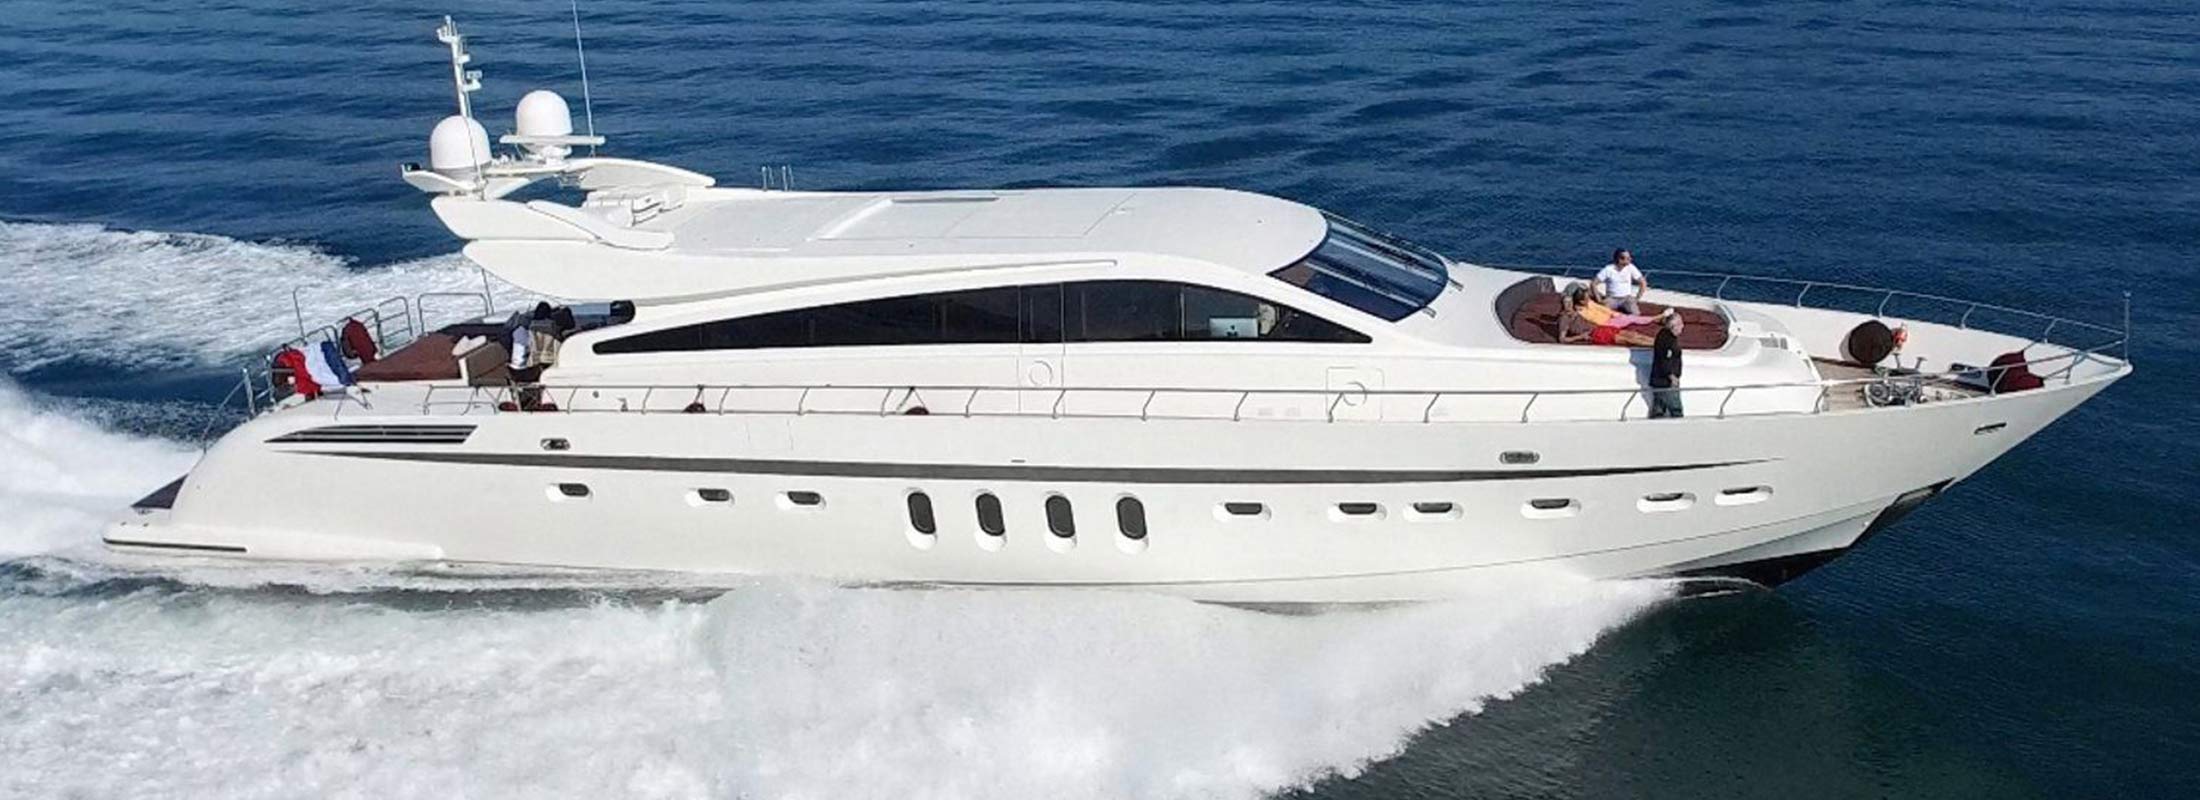 Eclat Motor Yacht for Charter Mediterranean slider 1